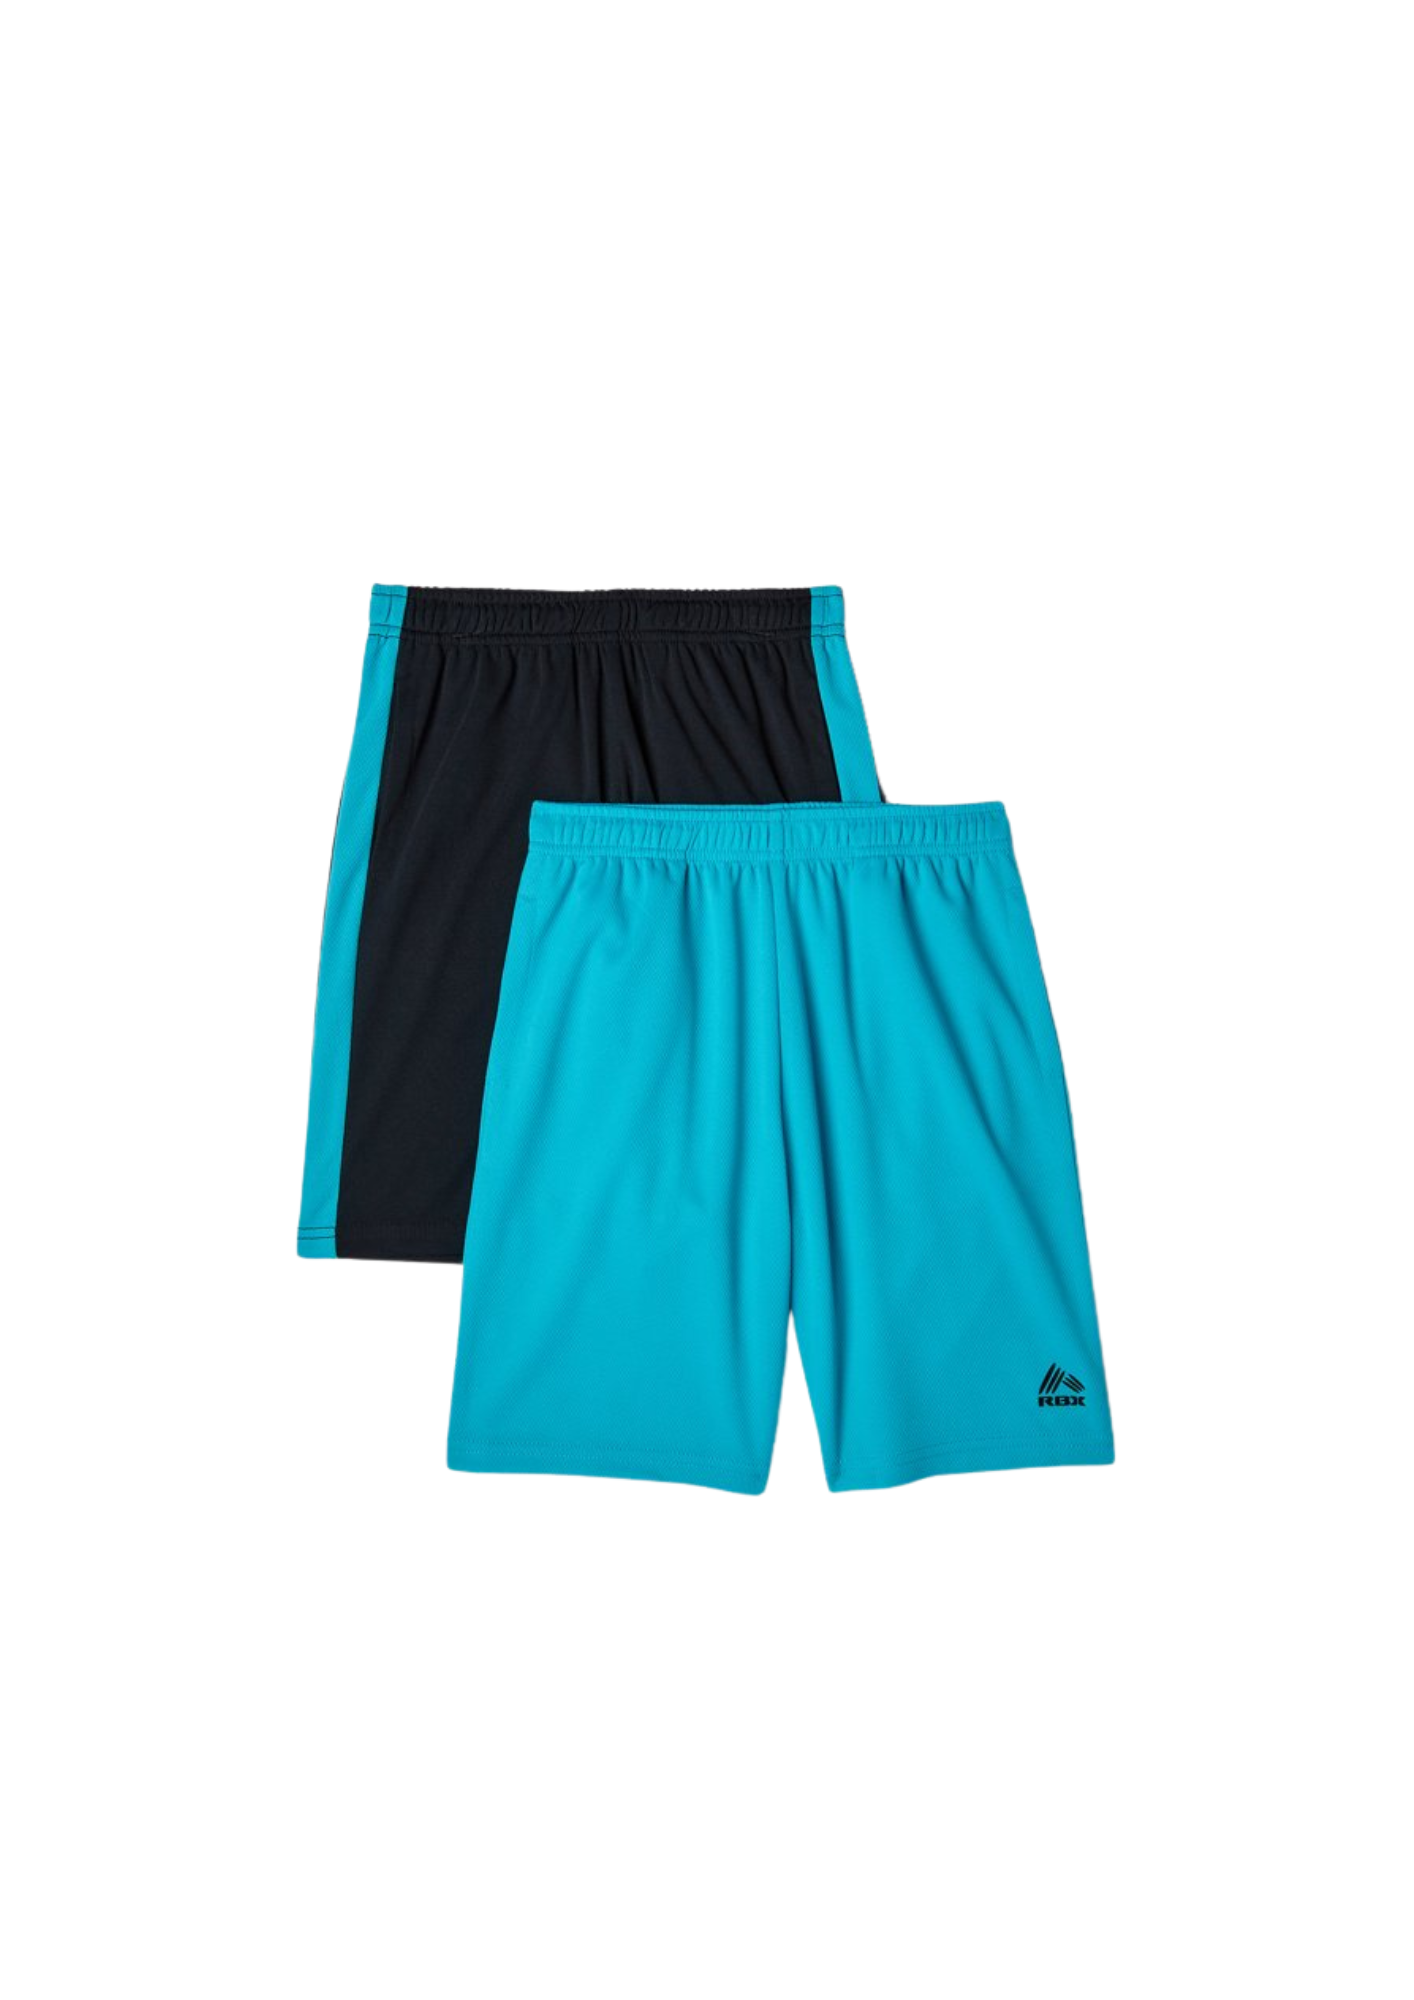 RBX - Paquete con 2 shorts